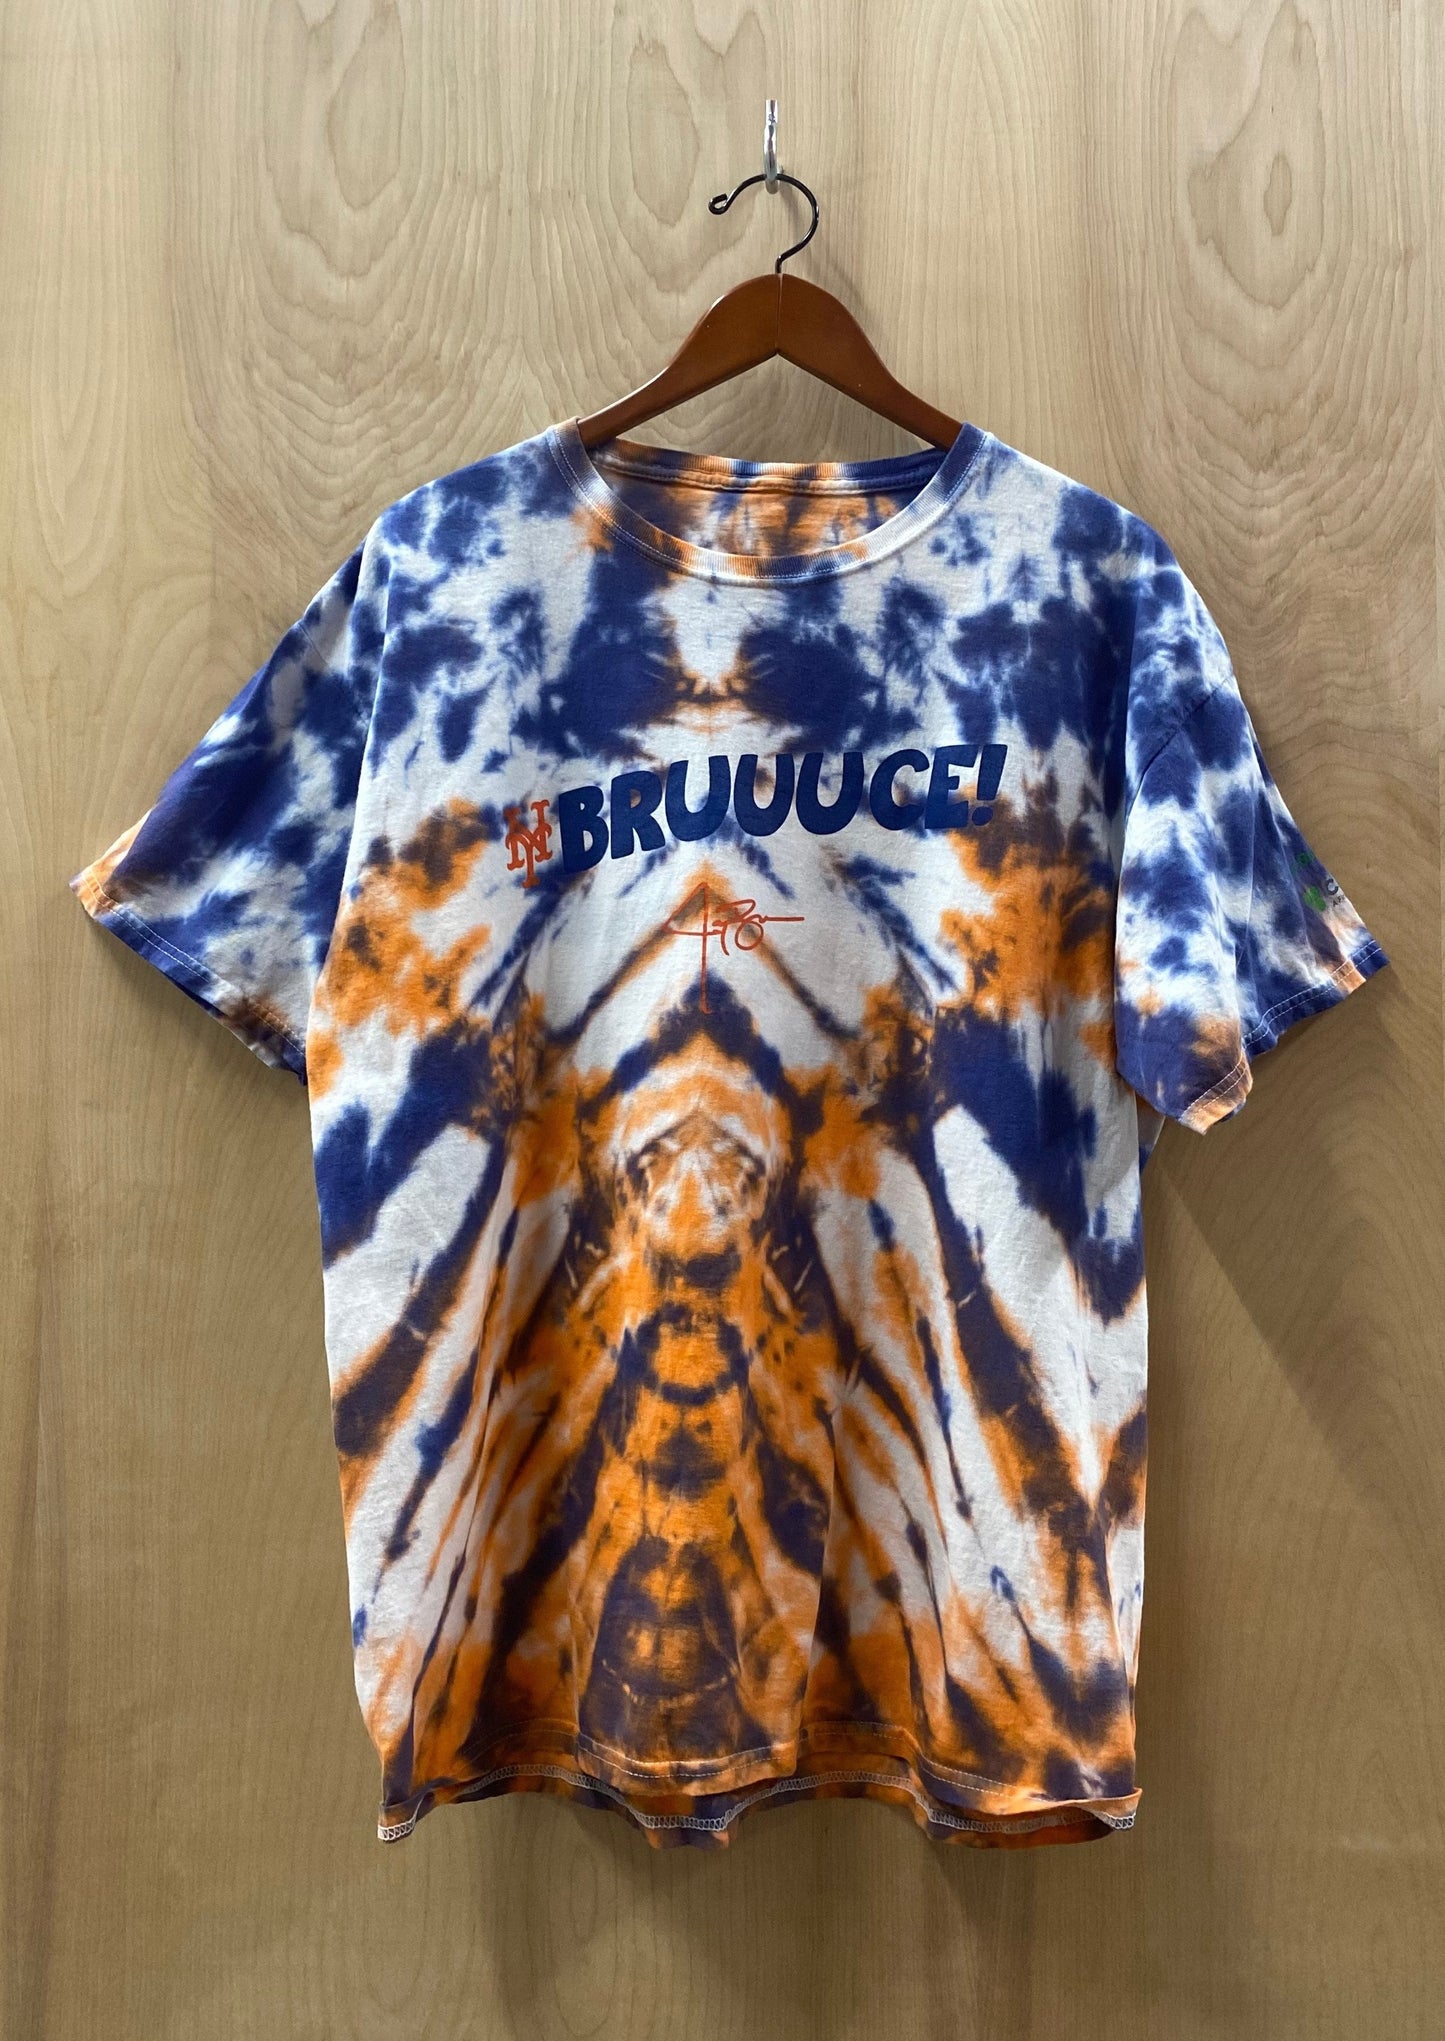 New York Mets Bruuce Tye Dye T-Shirt (4811528568912)